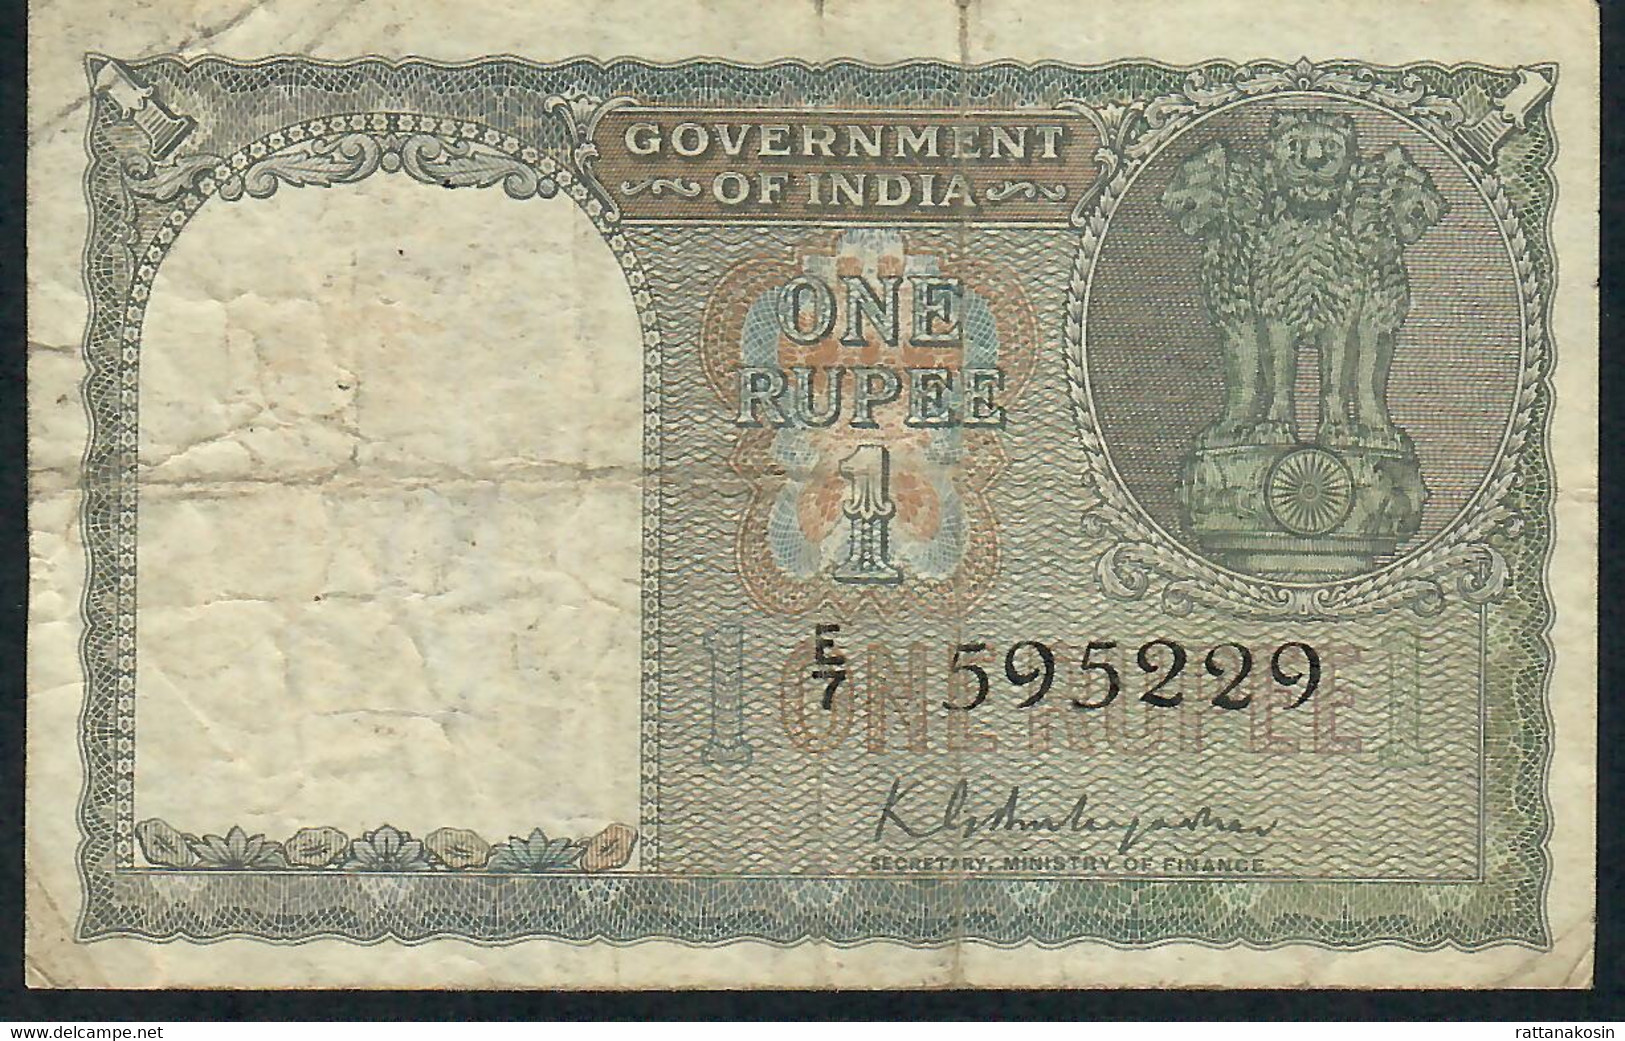 INDIA P71b 1 RUPEE Type 1949 Issued 5.6.1950 Signature Ambegaonkar #N/78 AVF FOLDS 2 P.h. - Inde